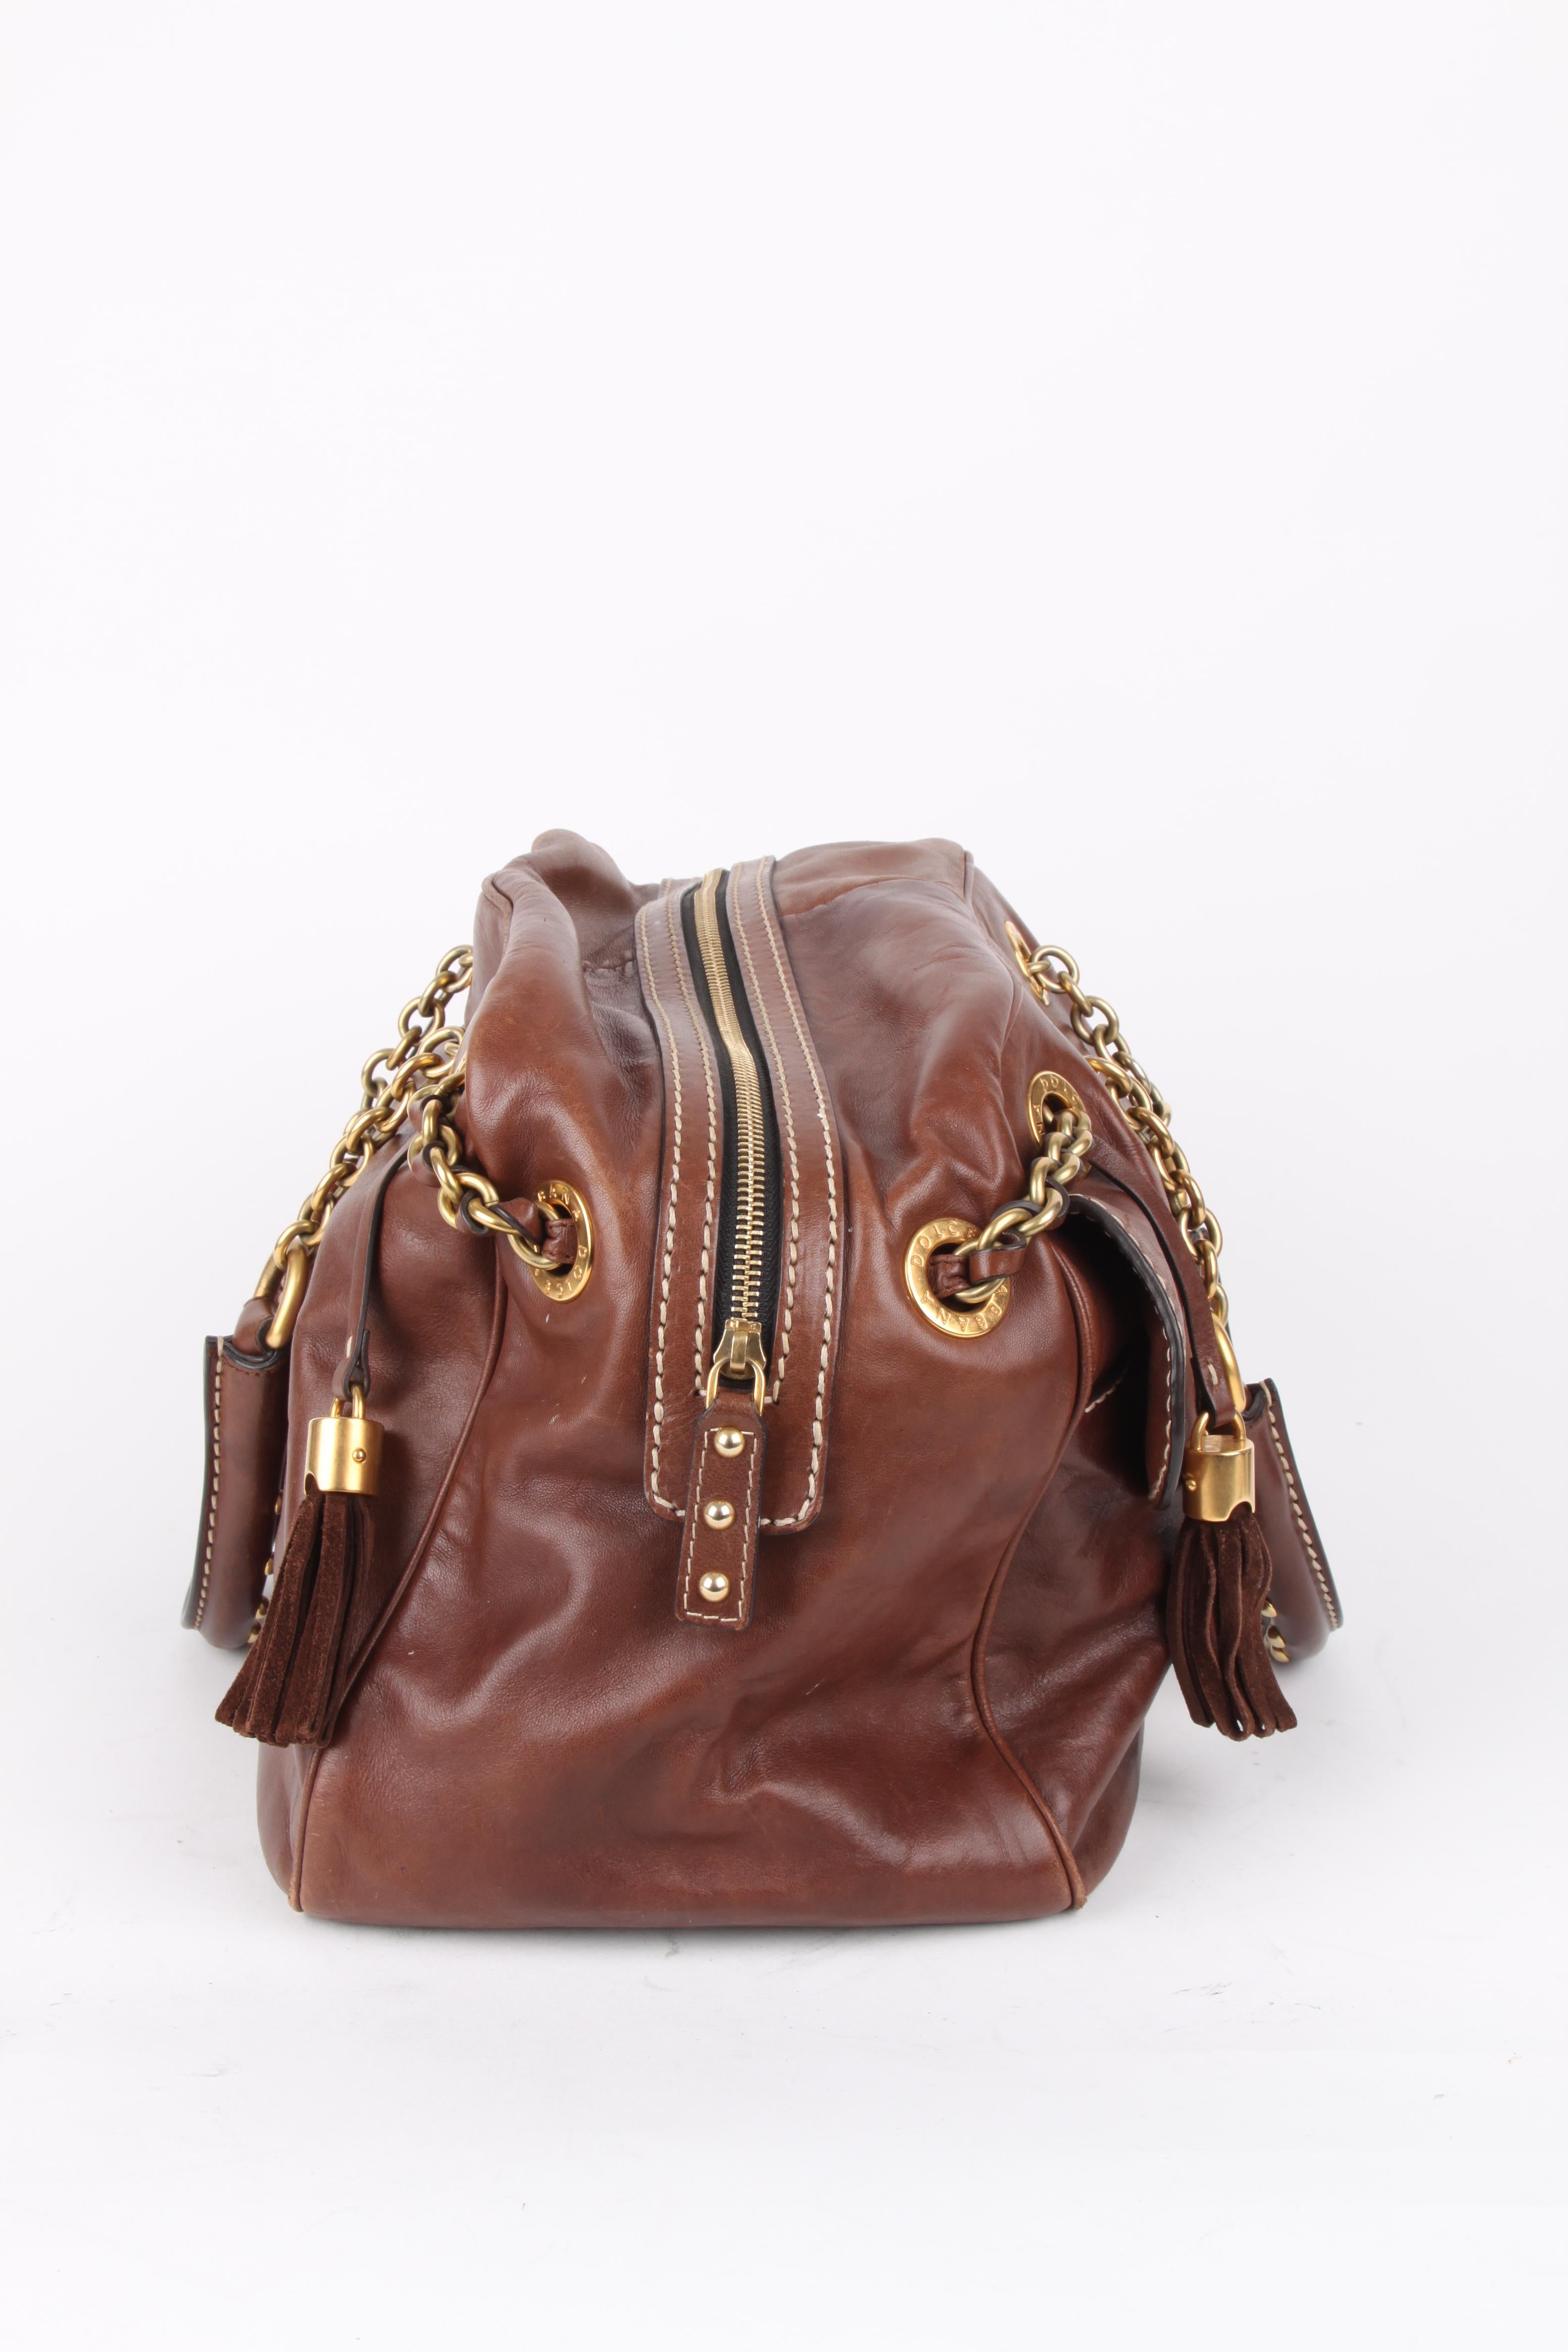 Dolce and Gabbana Brown Leather Tassle Chain Handbag For Sale 1